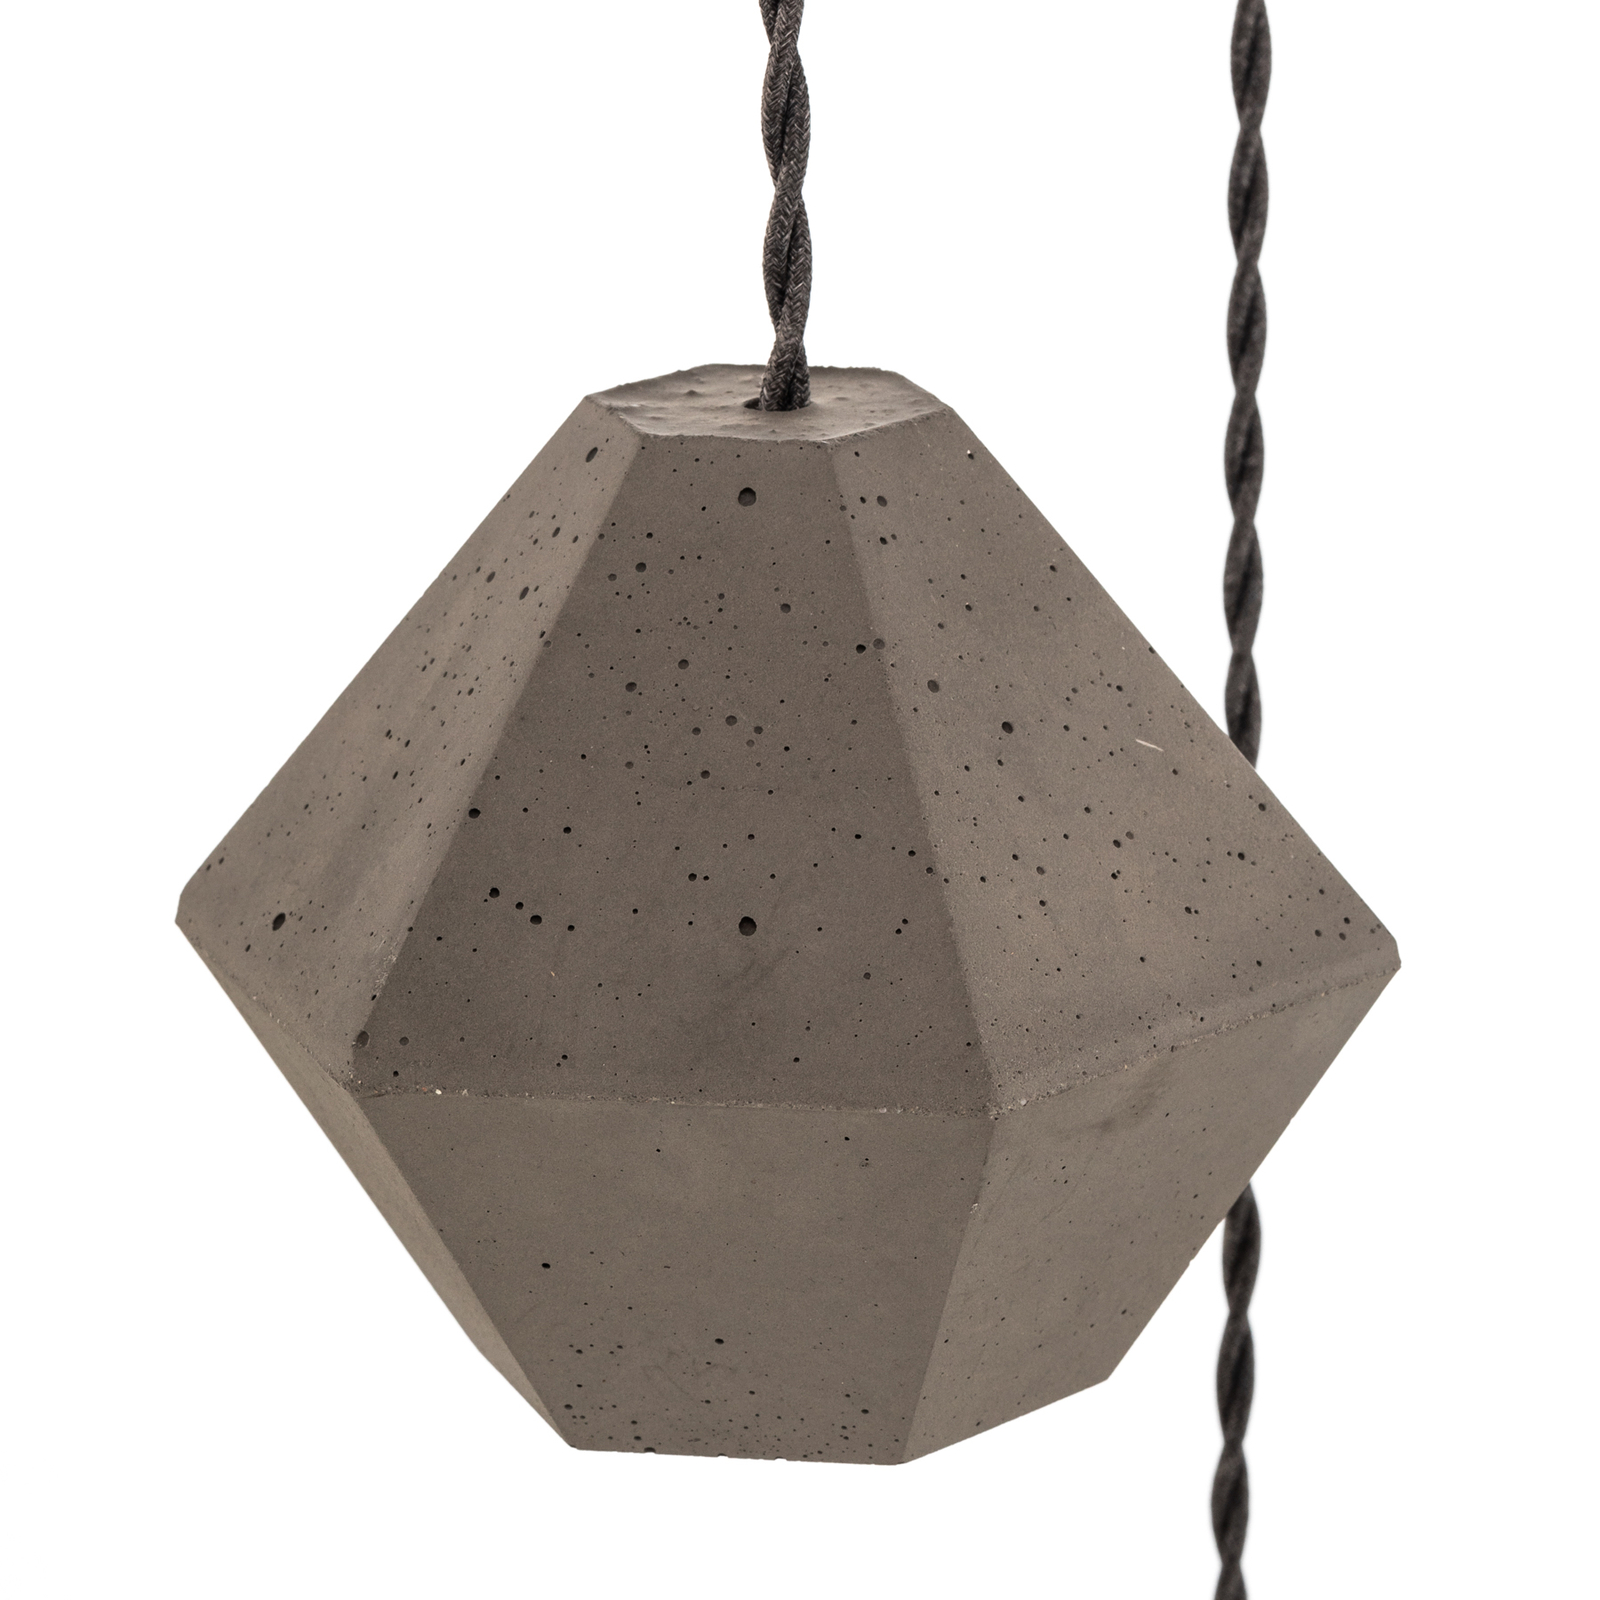 Geometrijska viseča svetilka III iz betona, tri luči